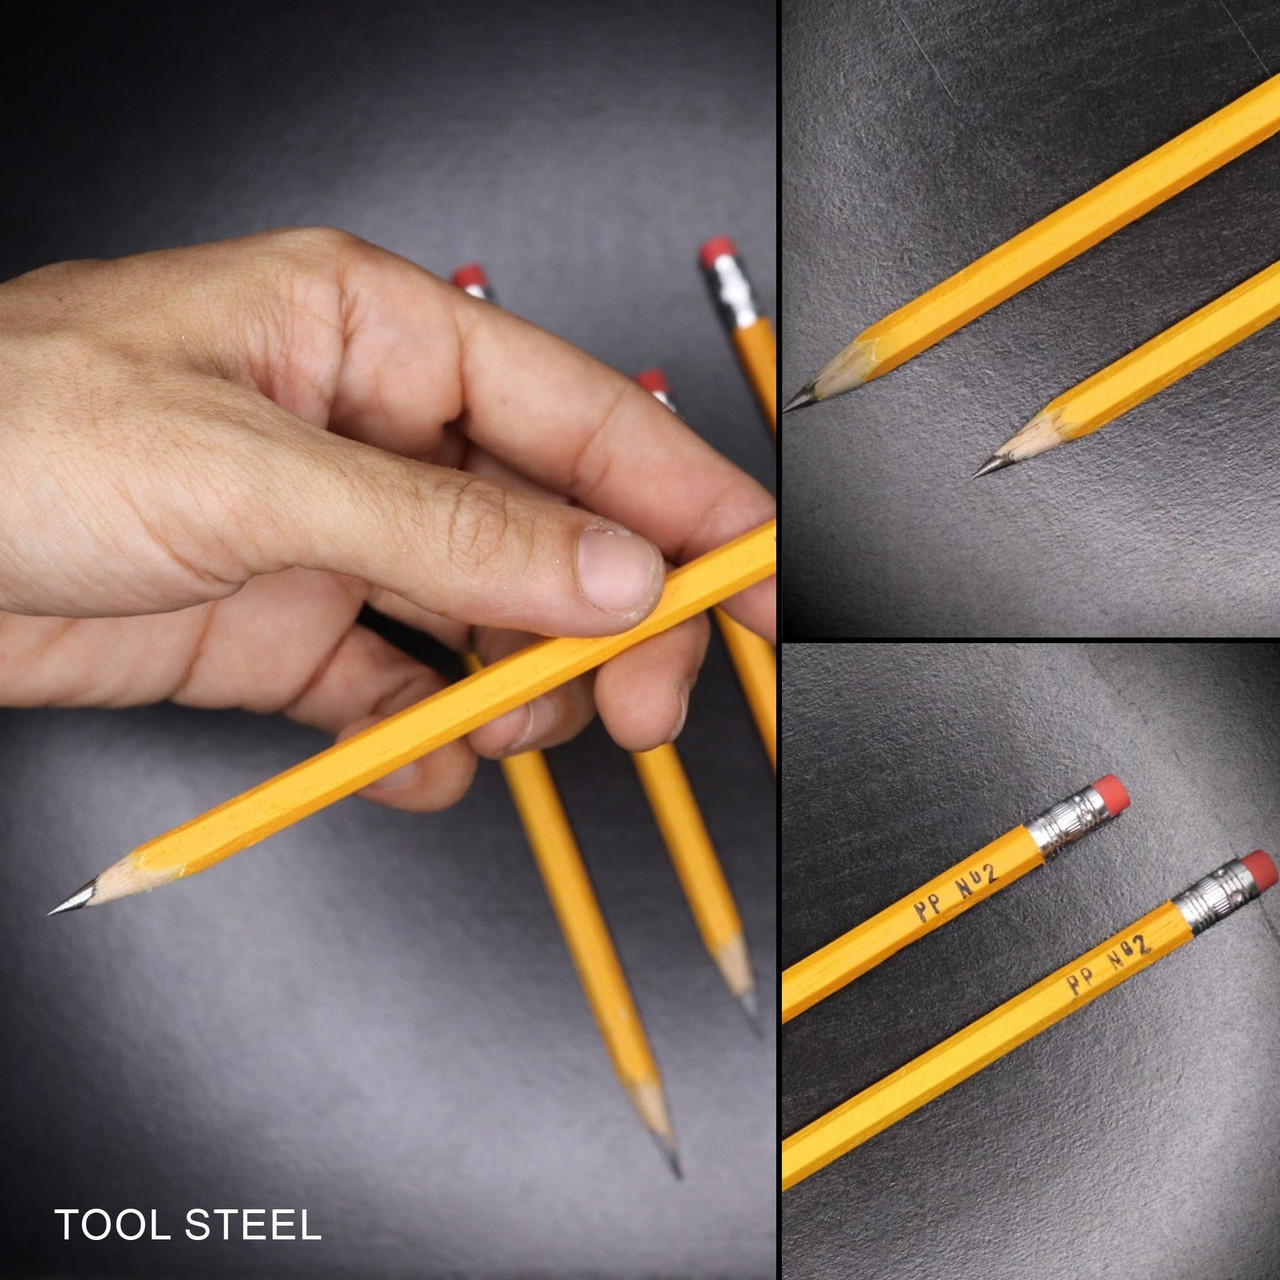 hb pencils – Polar Pencil Pusher